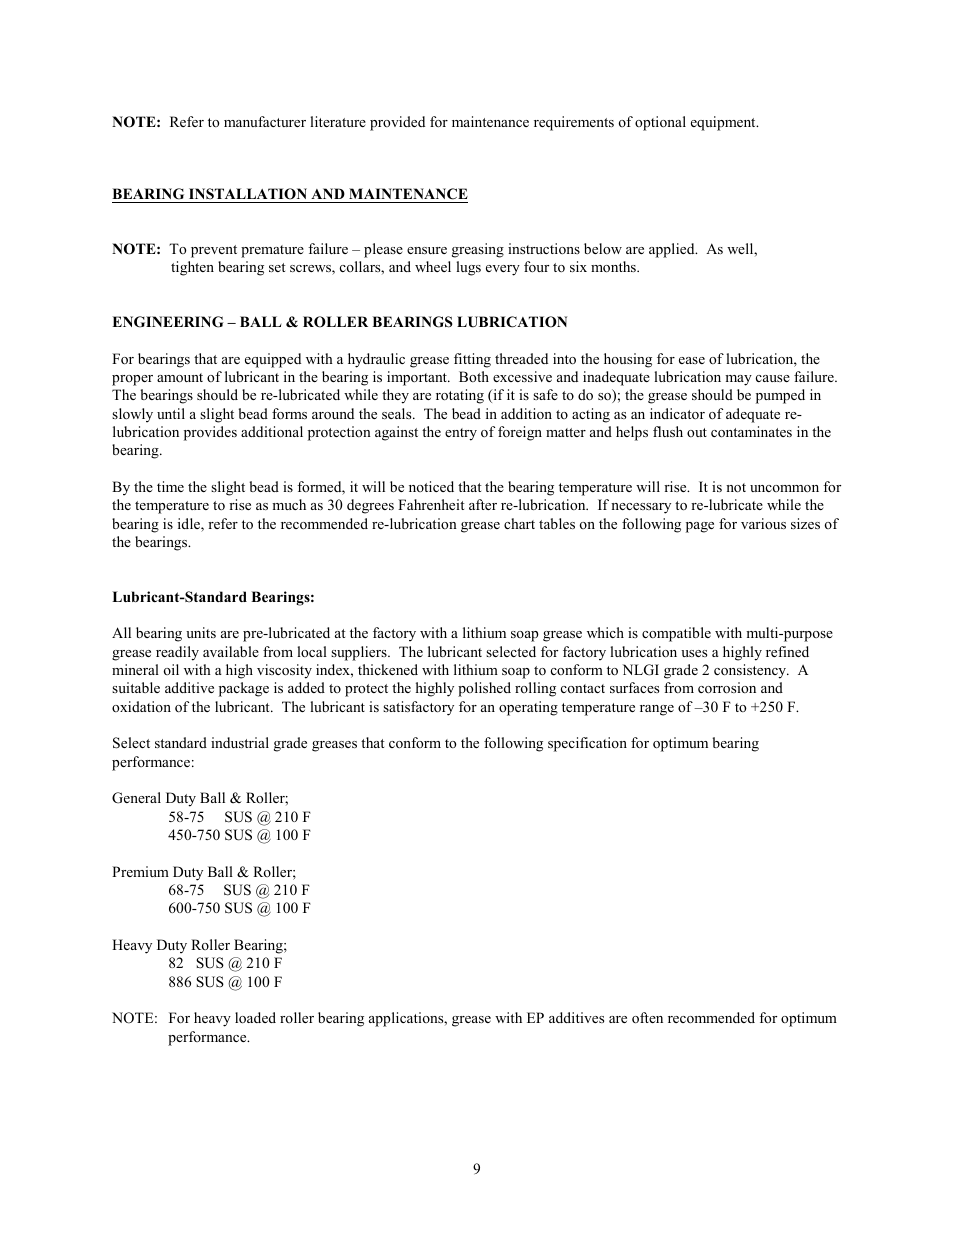 Bearing installation and maintenance | I.C.E. GIDM-325 User Manual | Page 10 / 29